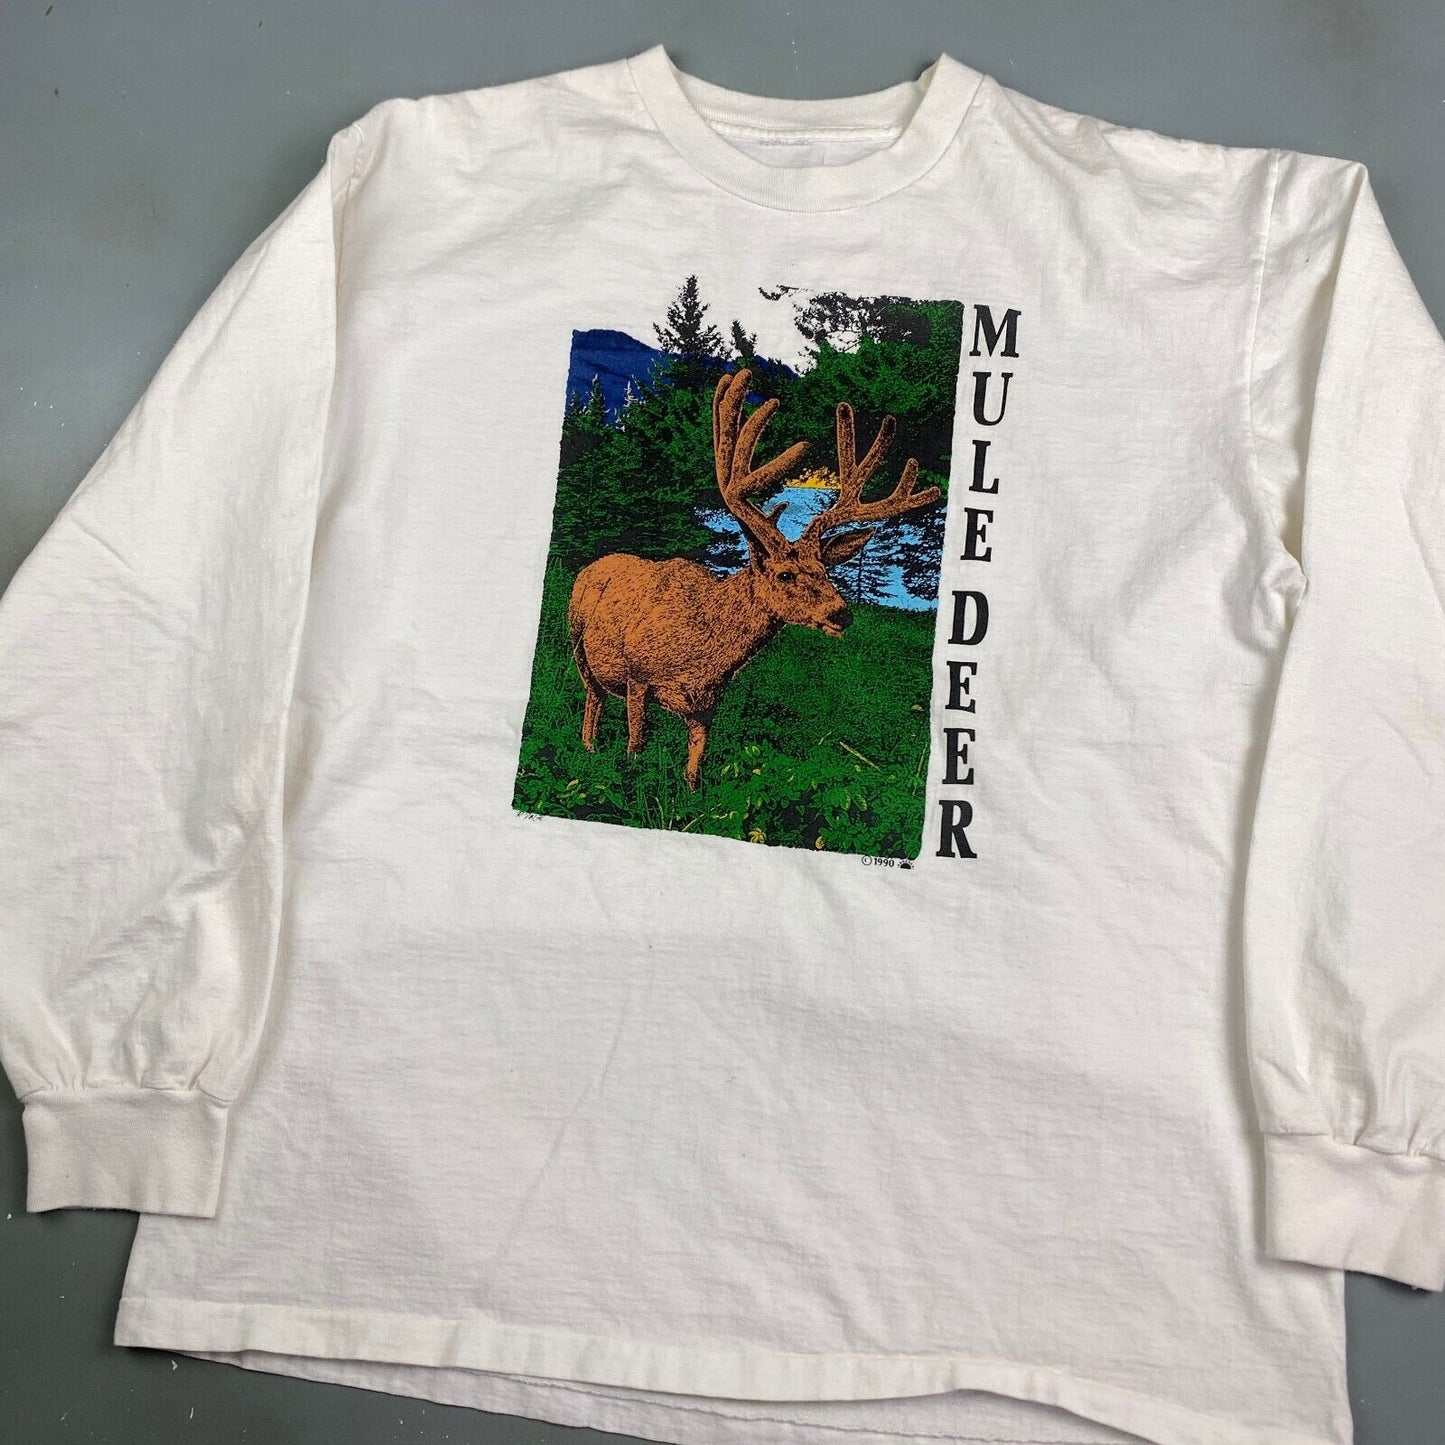 VINTAGE 90s Mule Deer Nature White Long Sleeve T-Shirt sz Large Men Adult